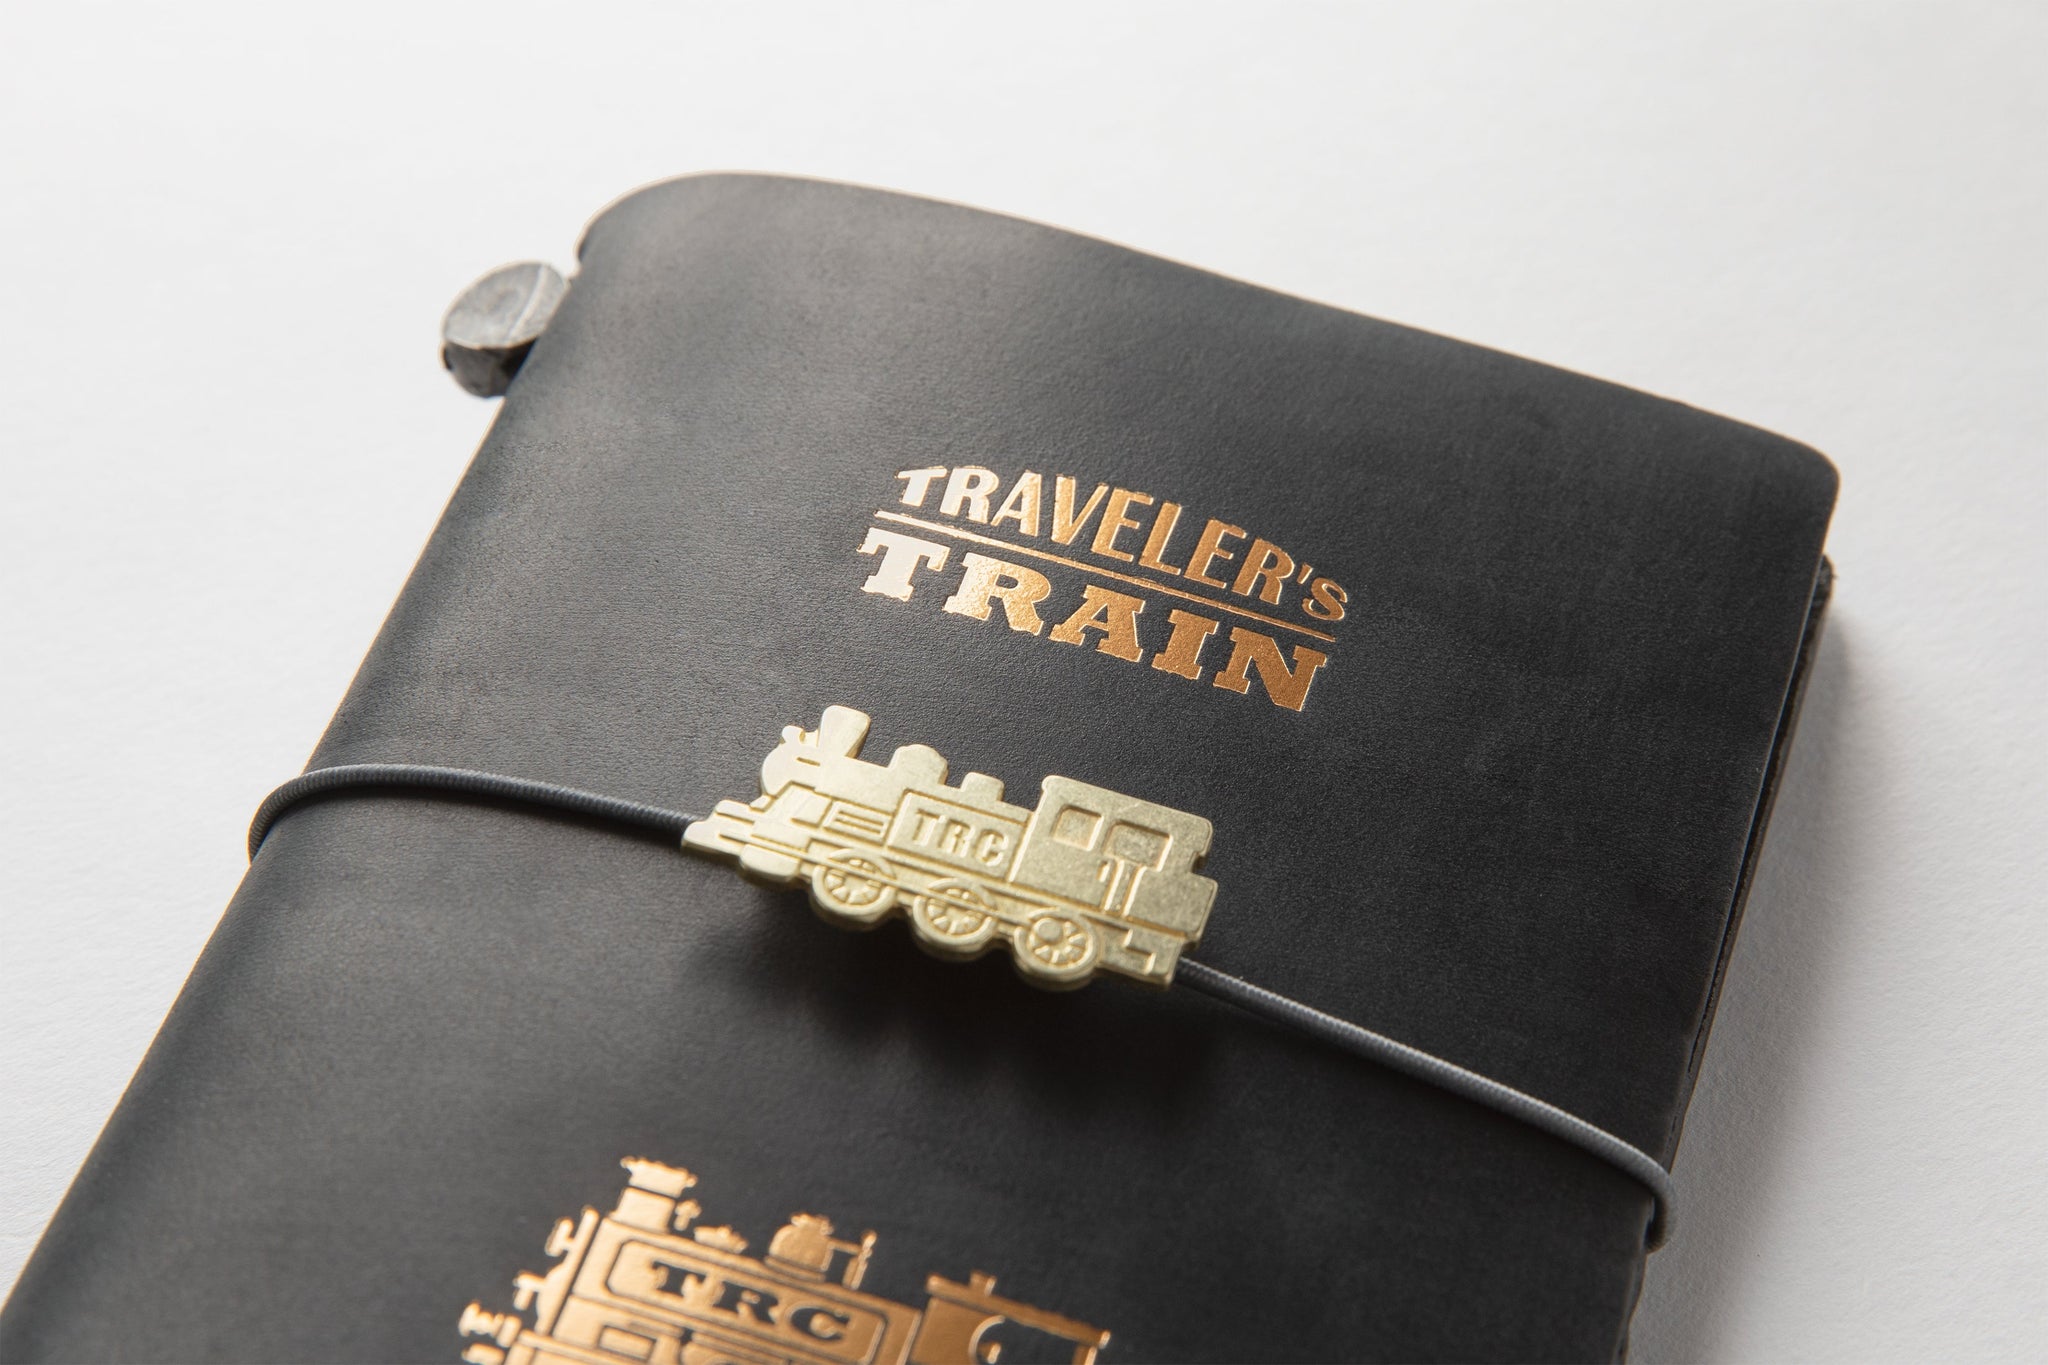 Traveler’s Company - Traveler's Train Limited Edition Set